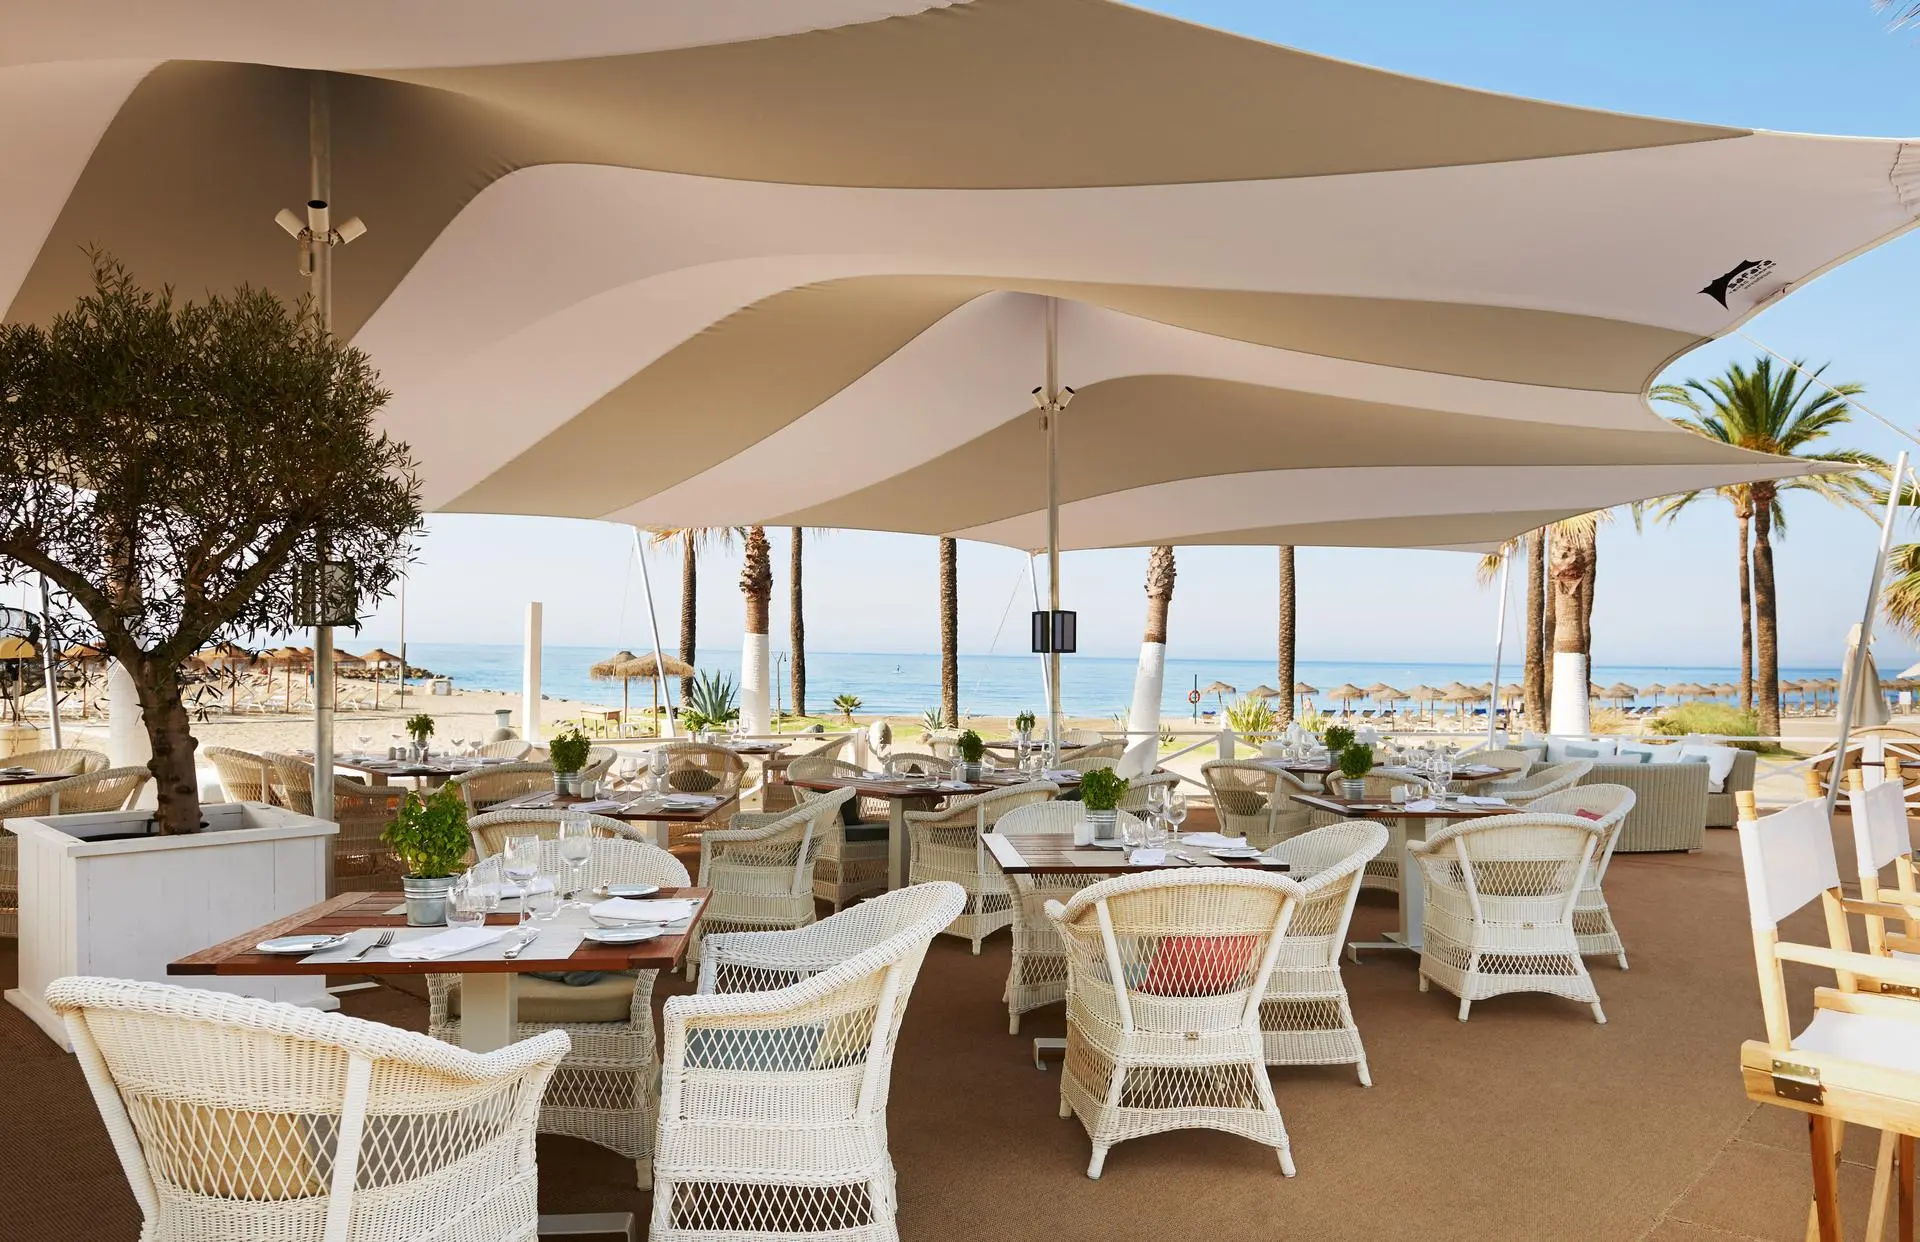 Del Mar Beach Cafe - Mediterranean Cuisine 04